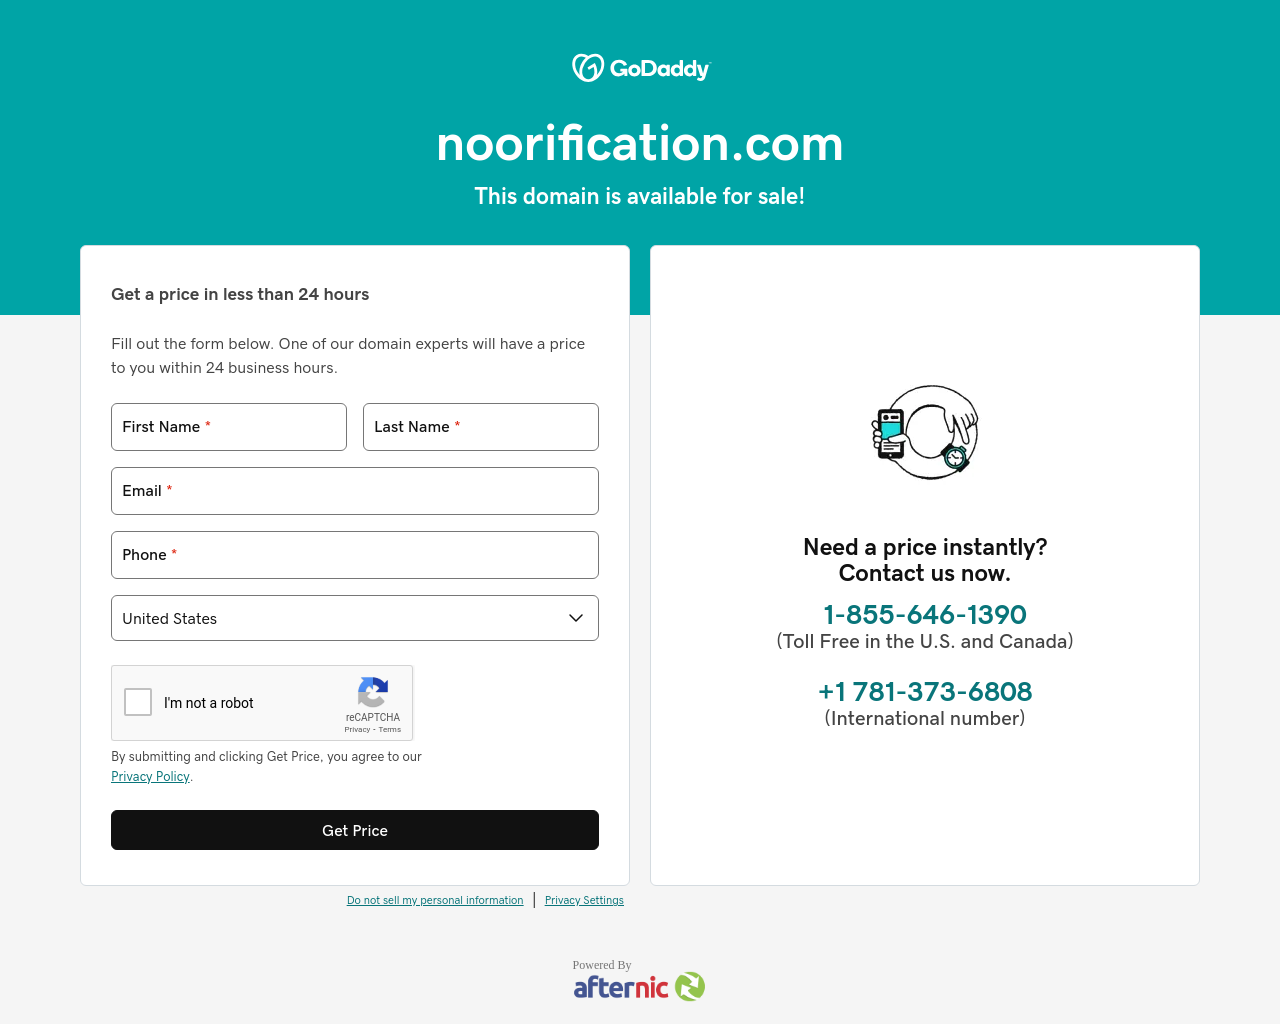 noorification.com